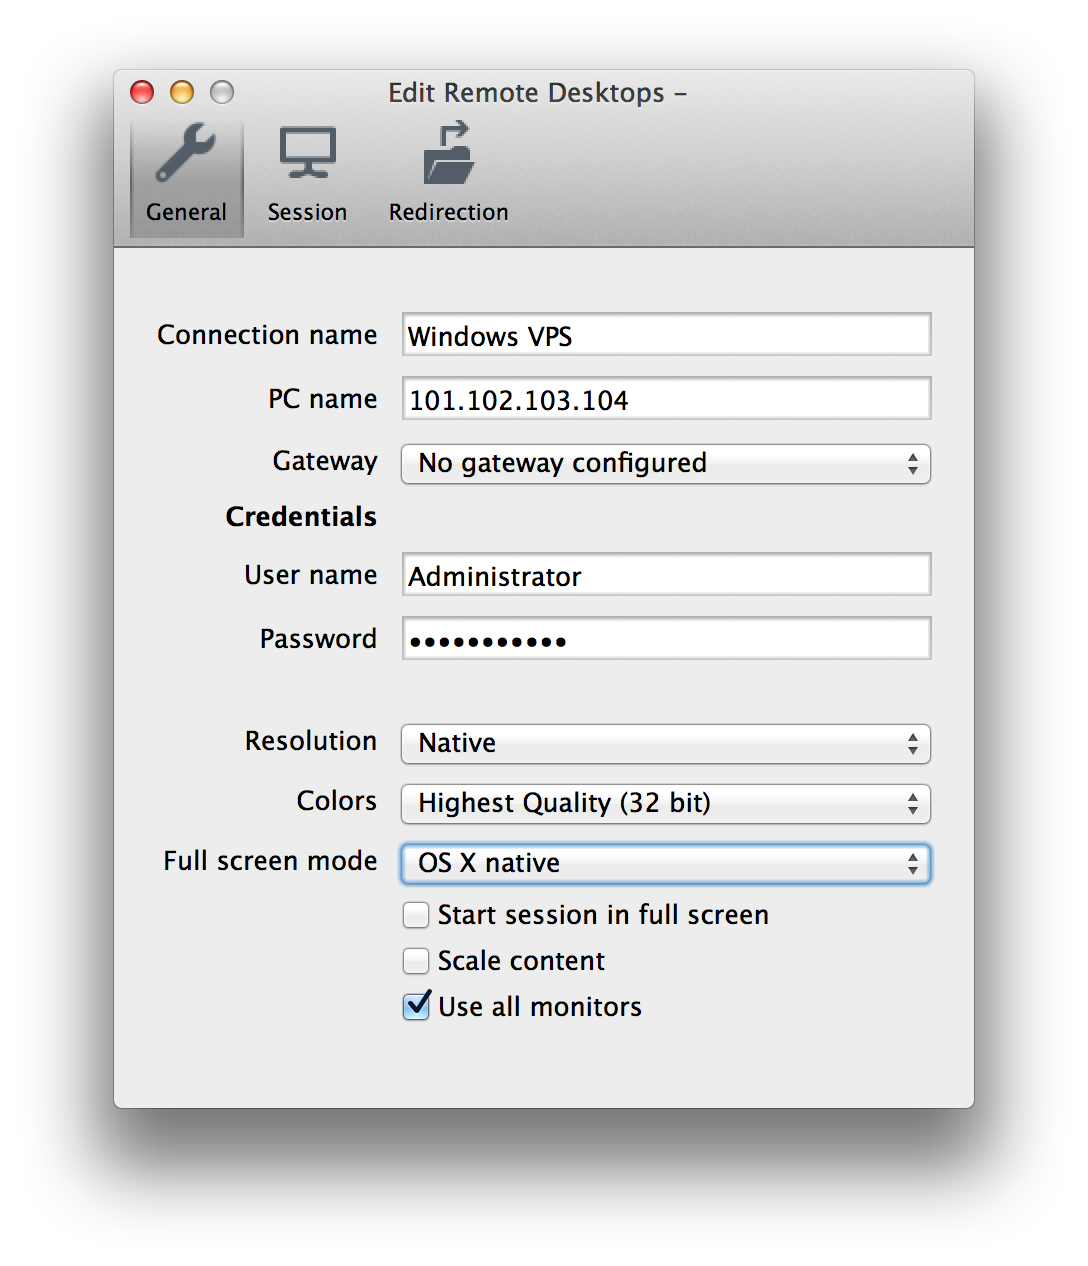 microsoft remote desktop mac 10.13 6 download